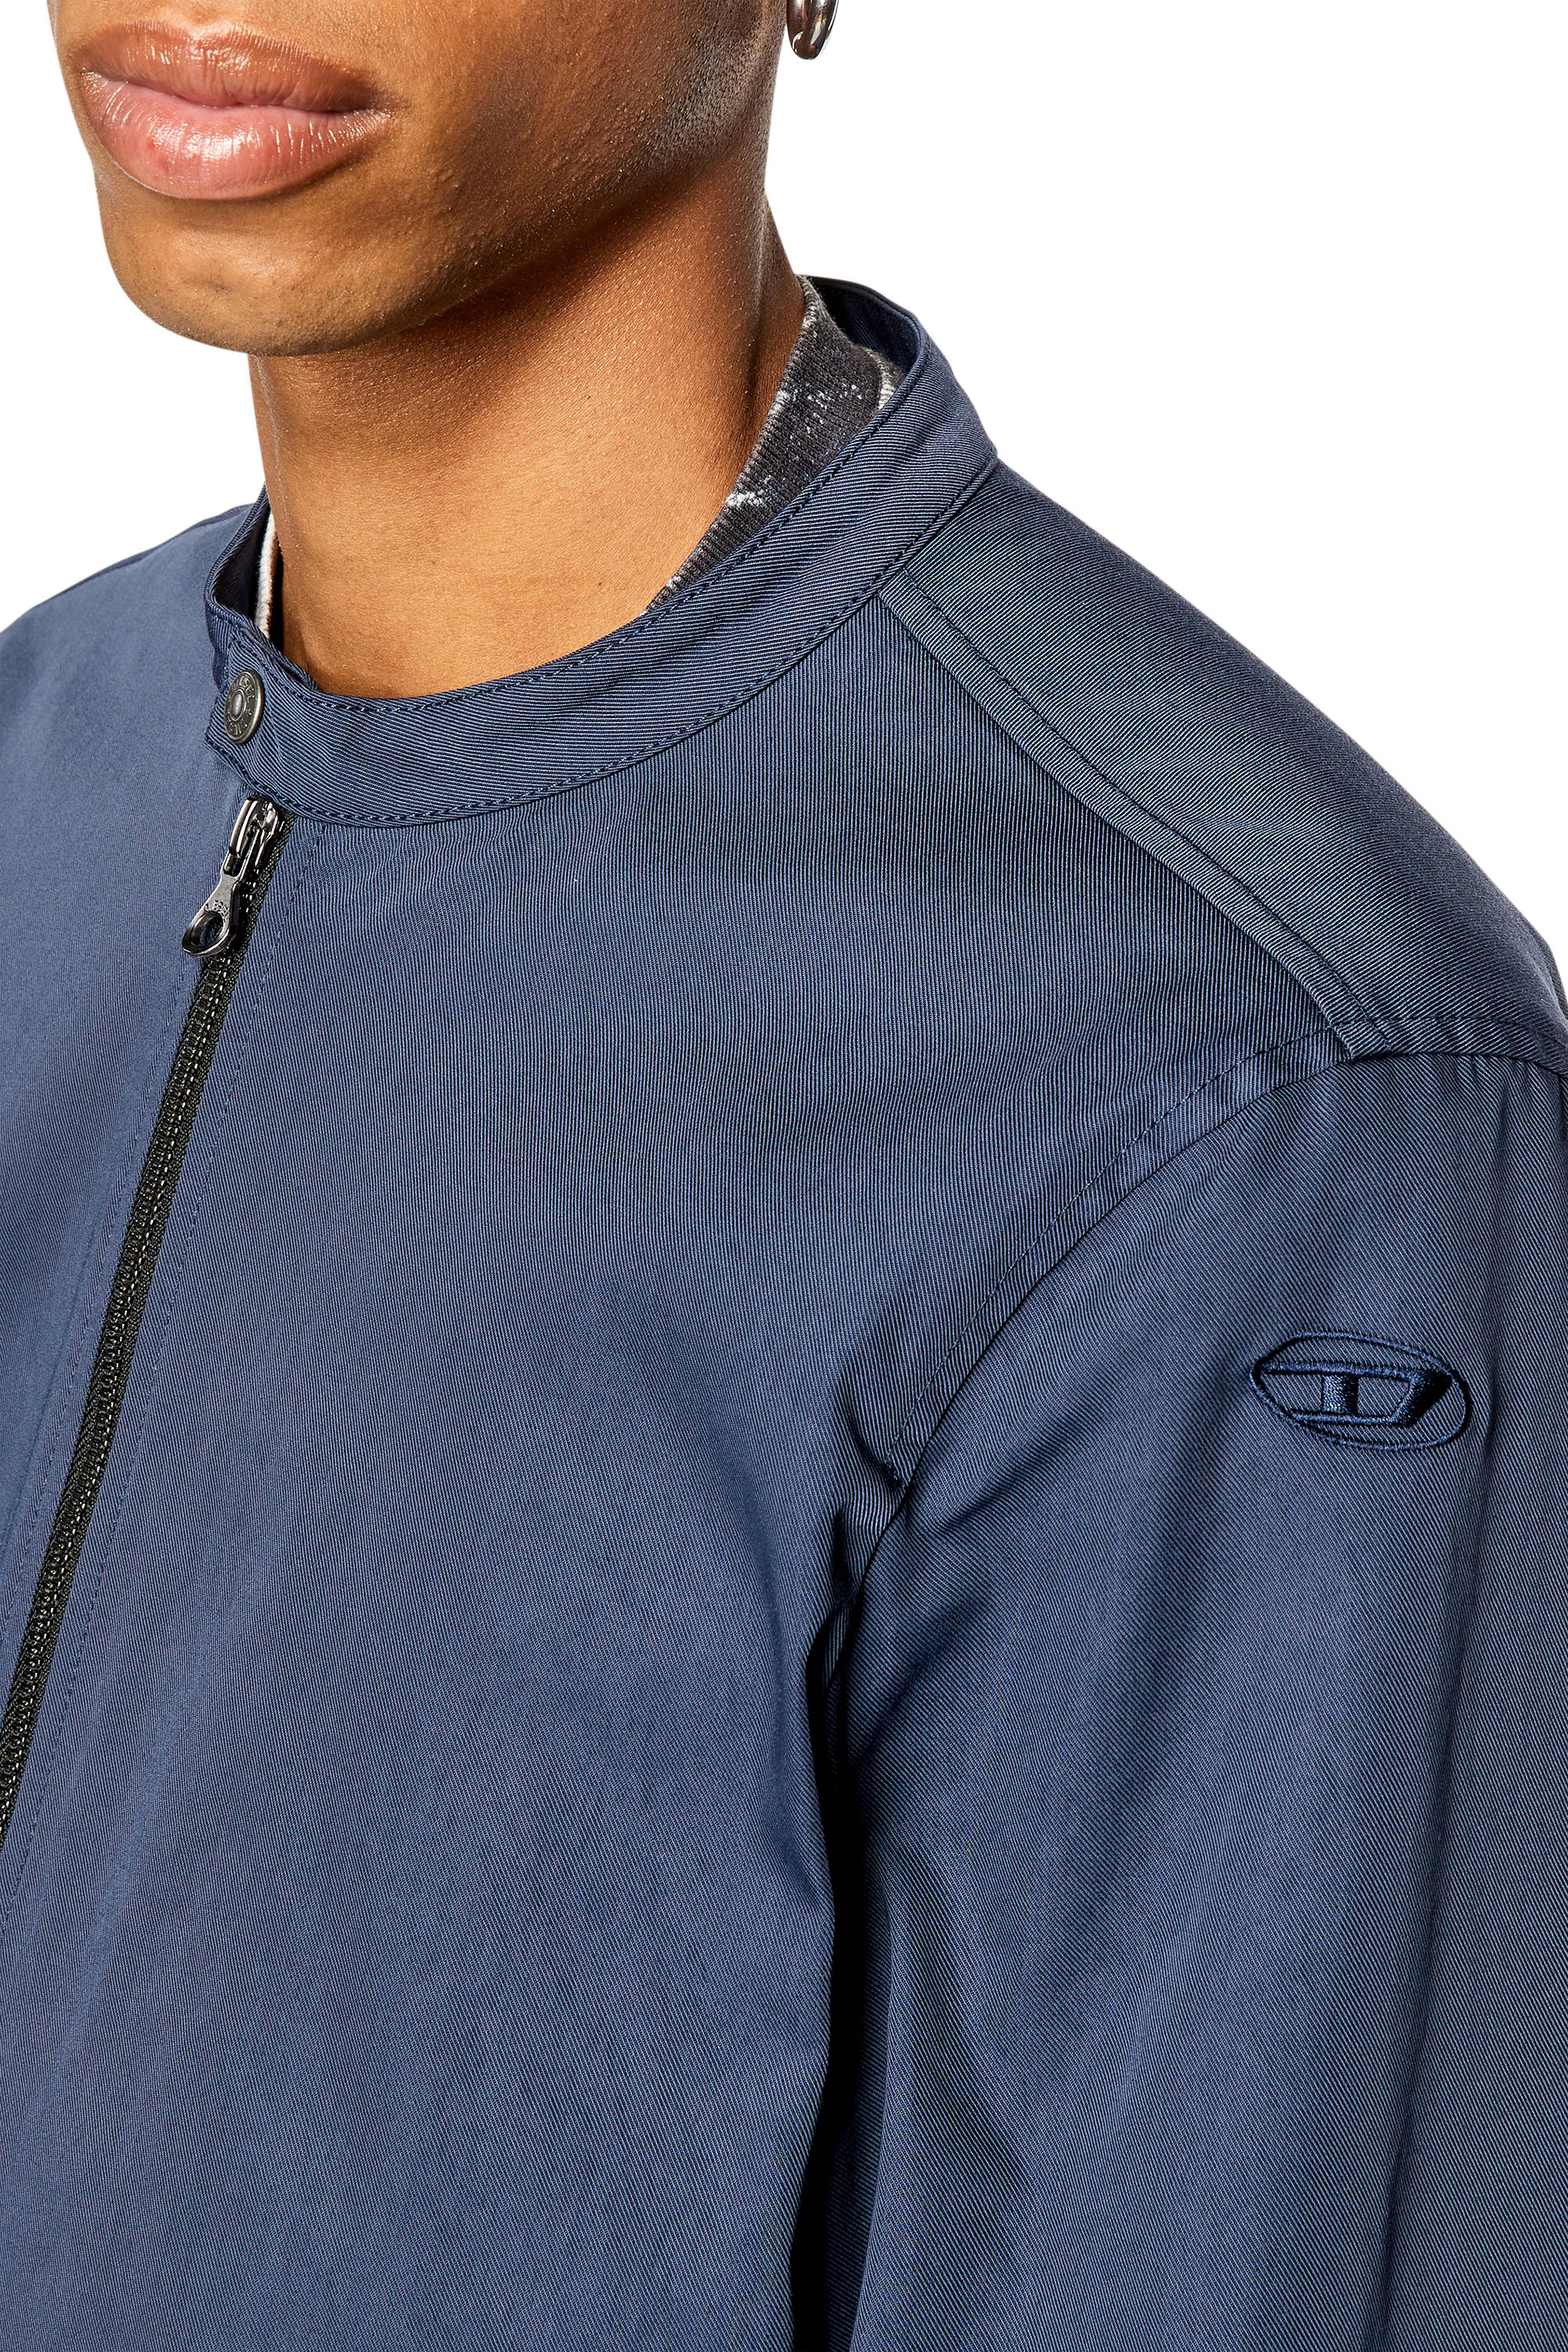 Diesel - J-GLORY-NW, Man Biker jacket in cotton-touch nylon in Blue - Image 5